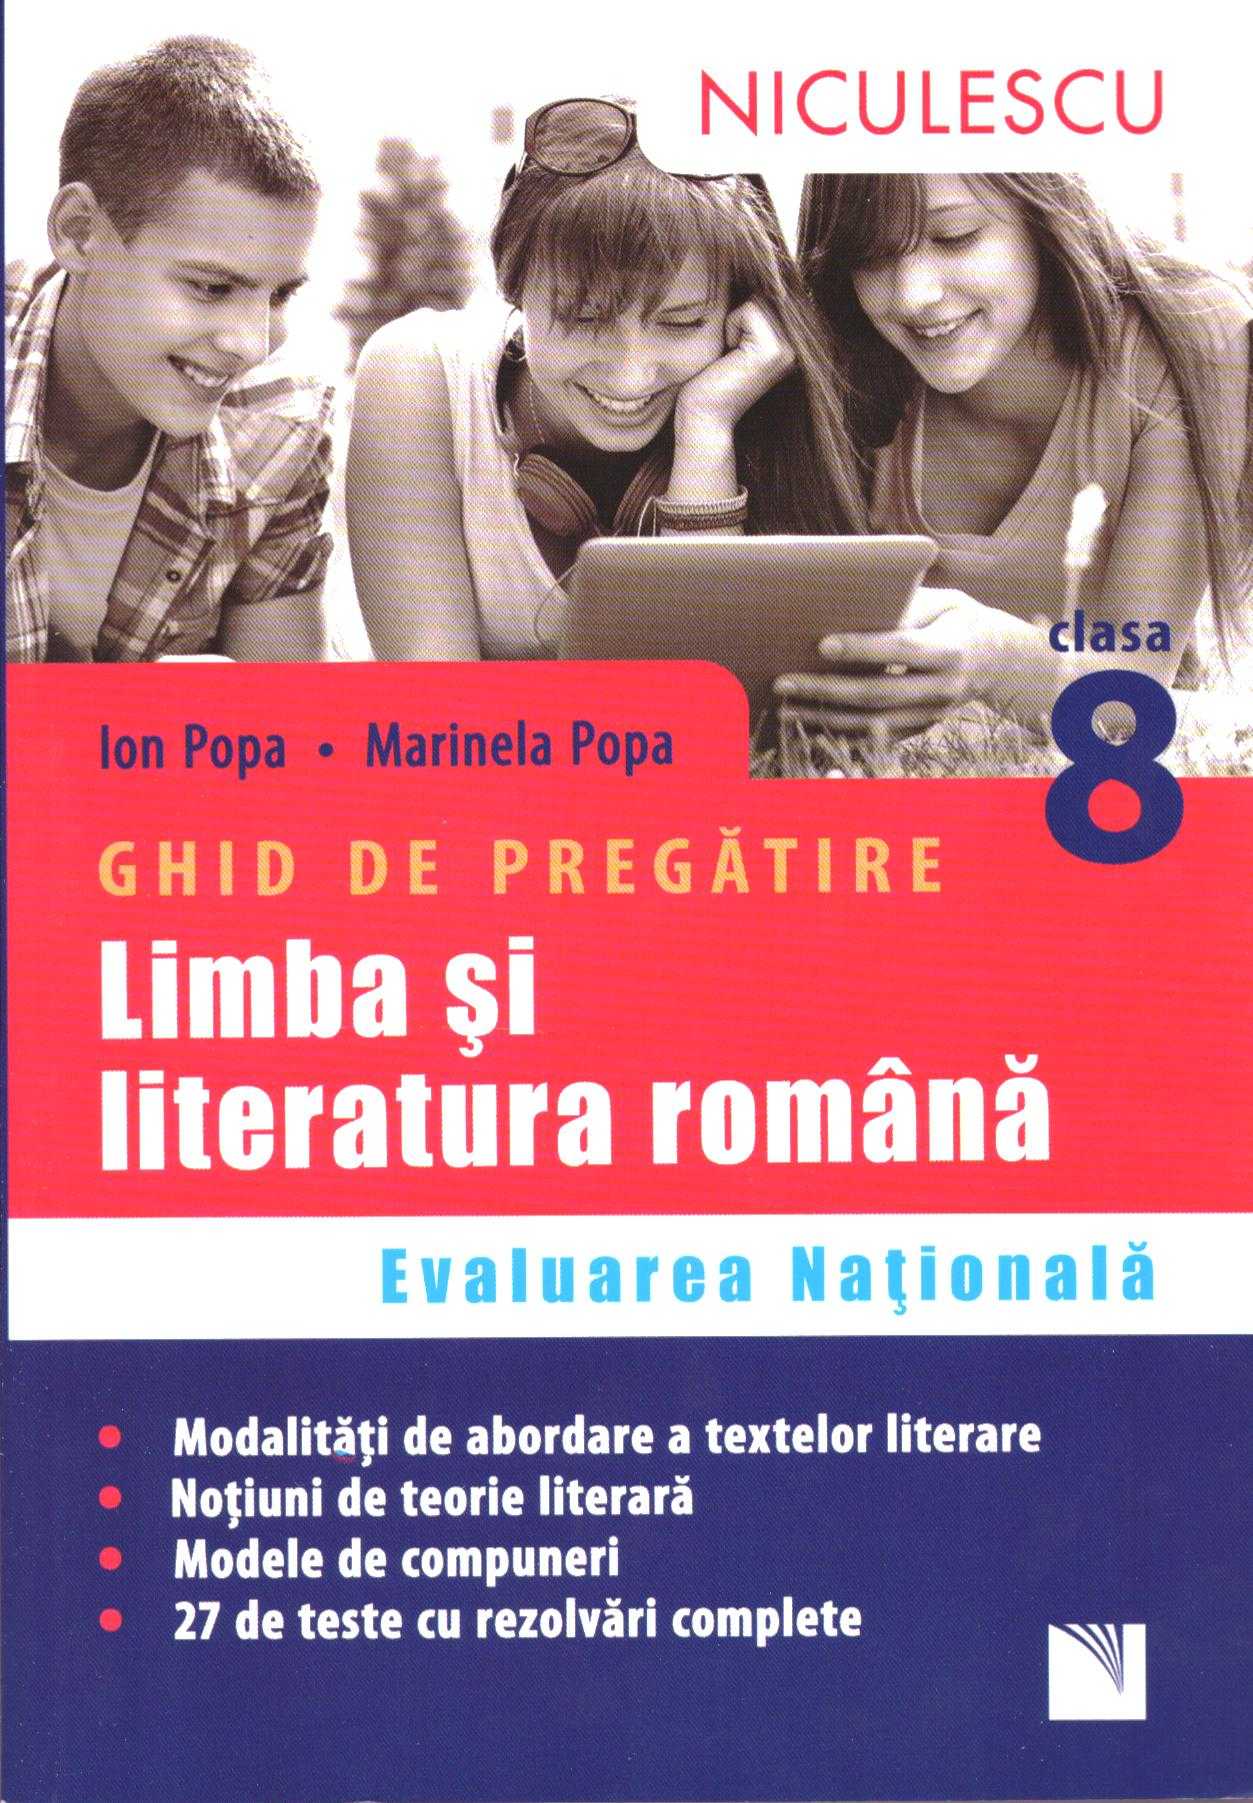 Romana - Clasa 8 - Evaluare nationala. Ghid de pregatire - Ion Popa, Marinela Popa